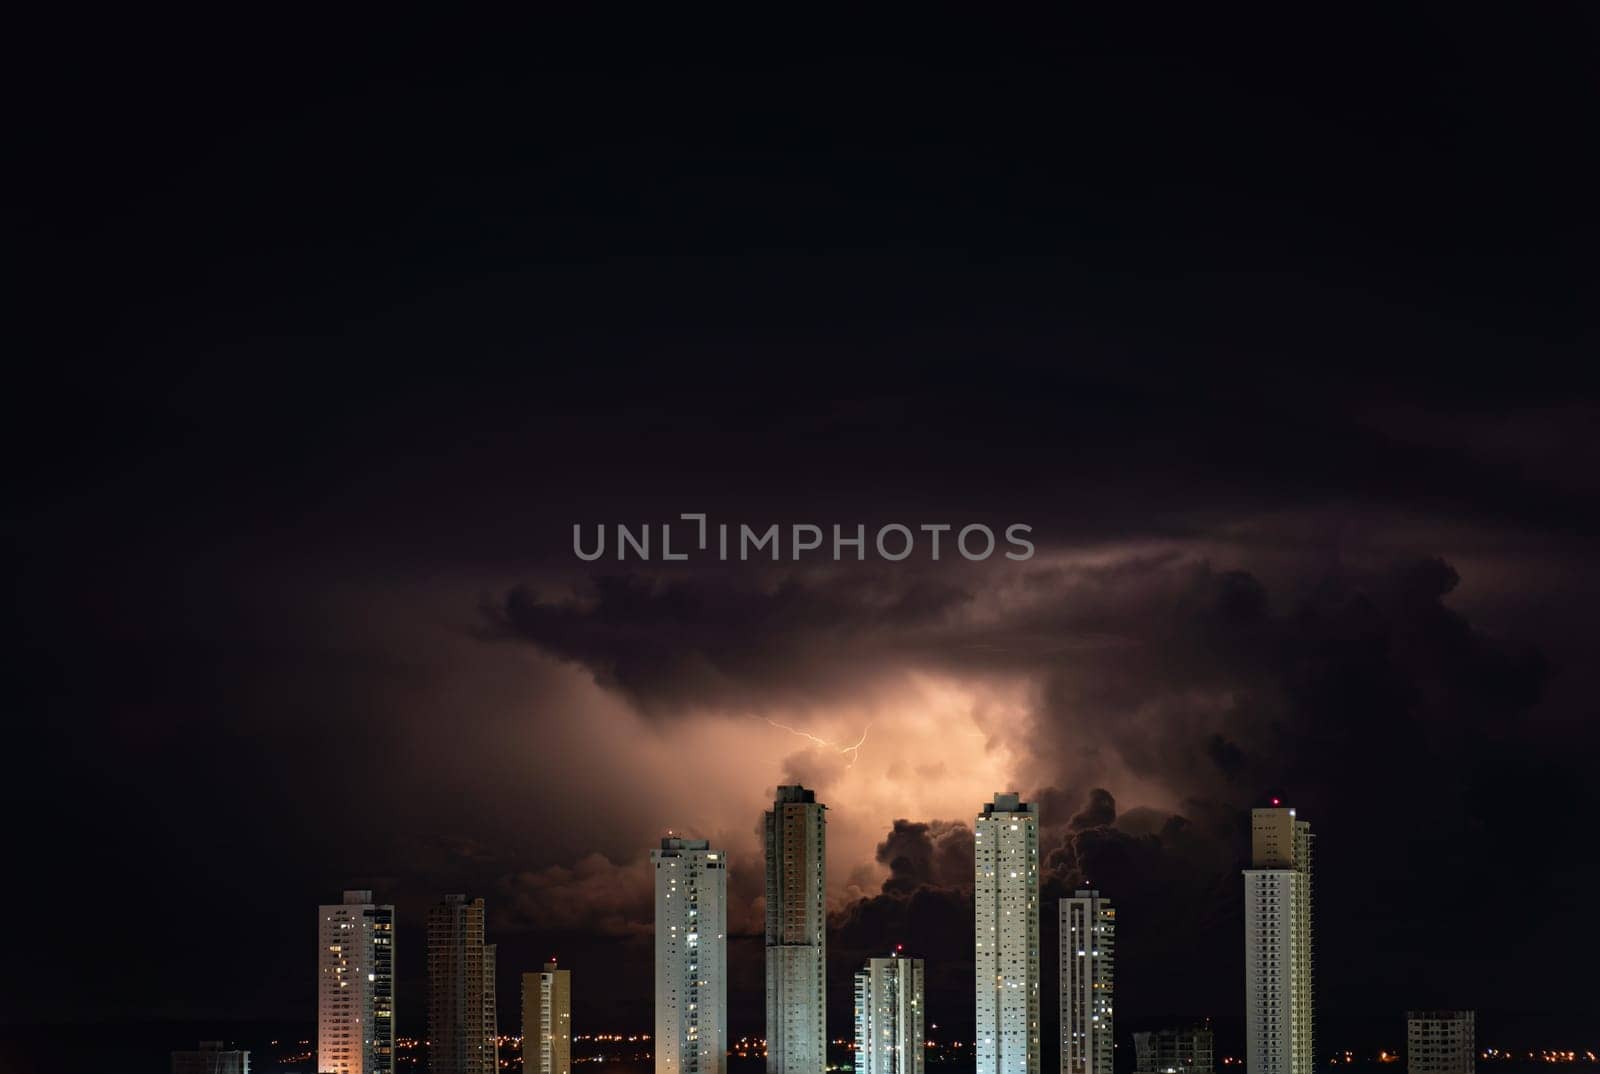 Night Skyscrapers with Thunderstorm by FerradalFCG